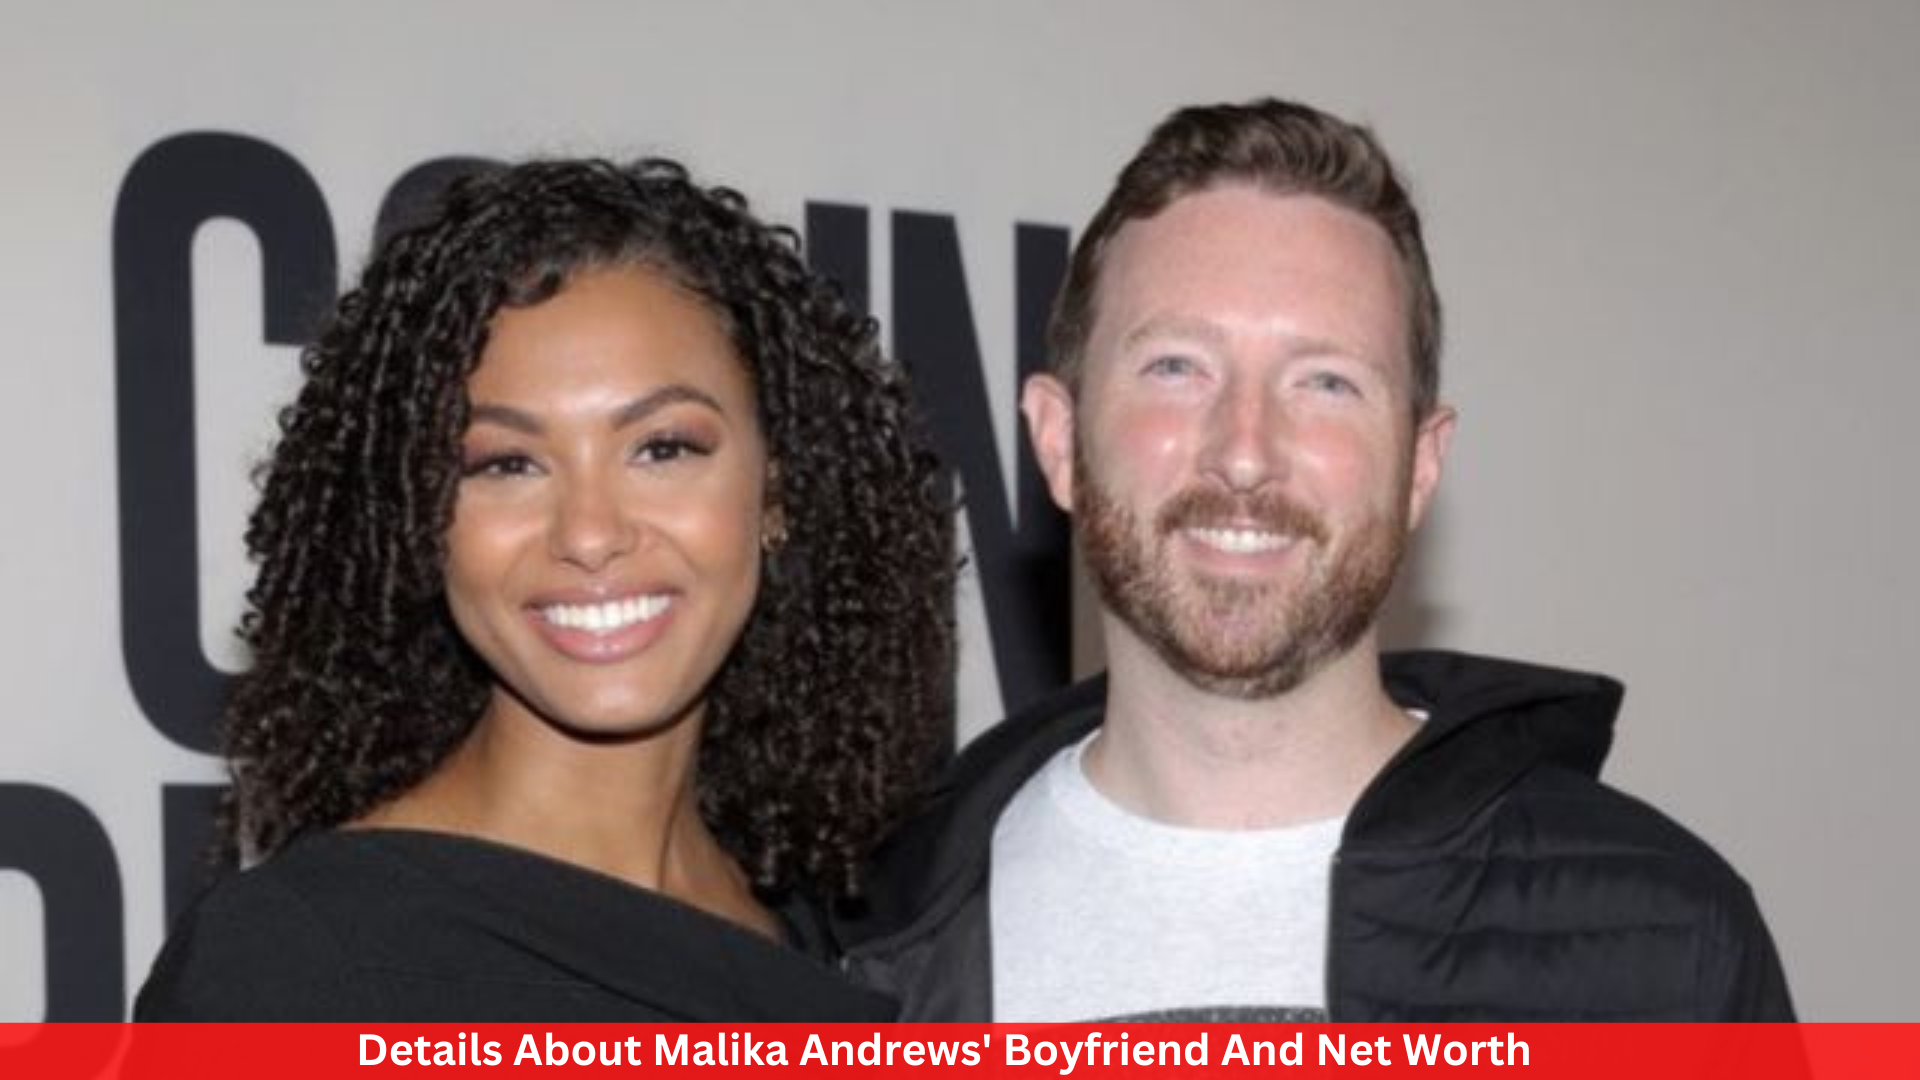 Details About Malika Andrews' Boyfriend And Net Worth